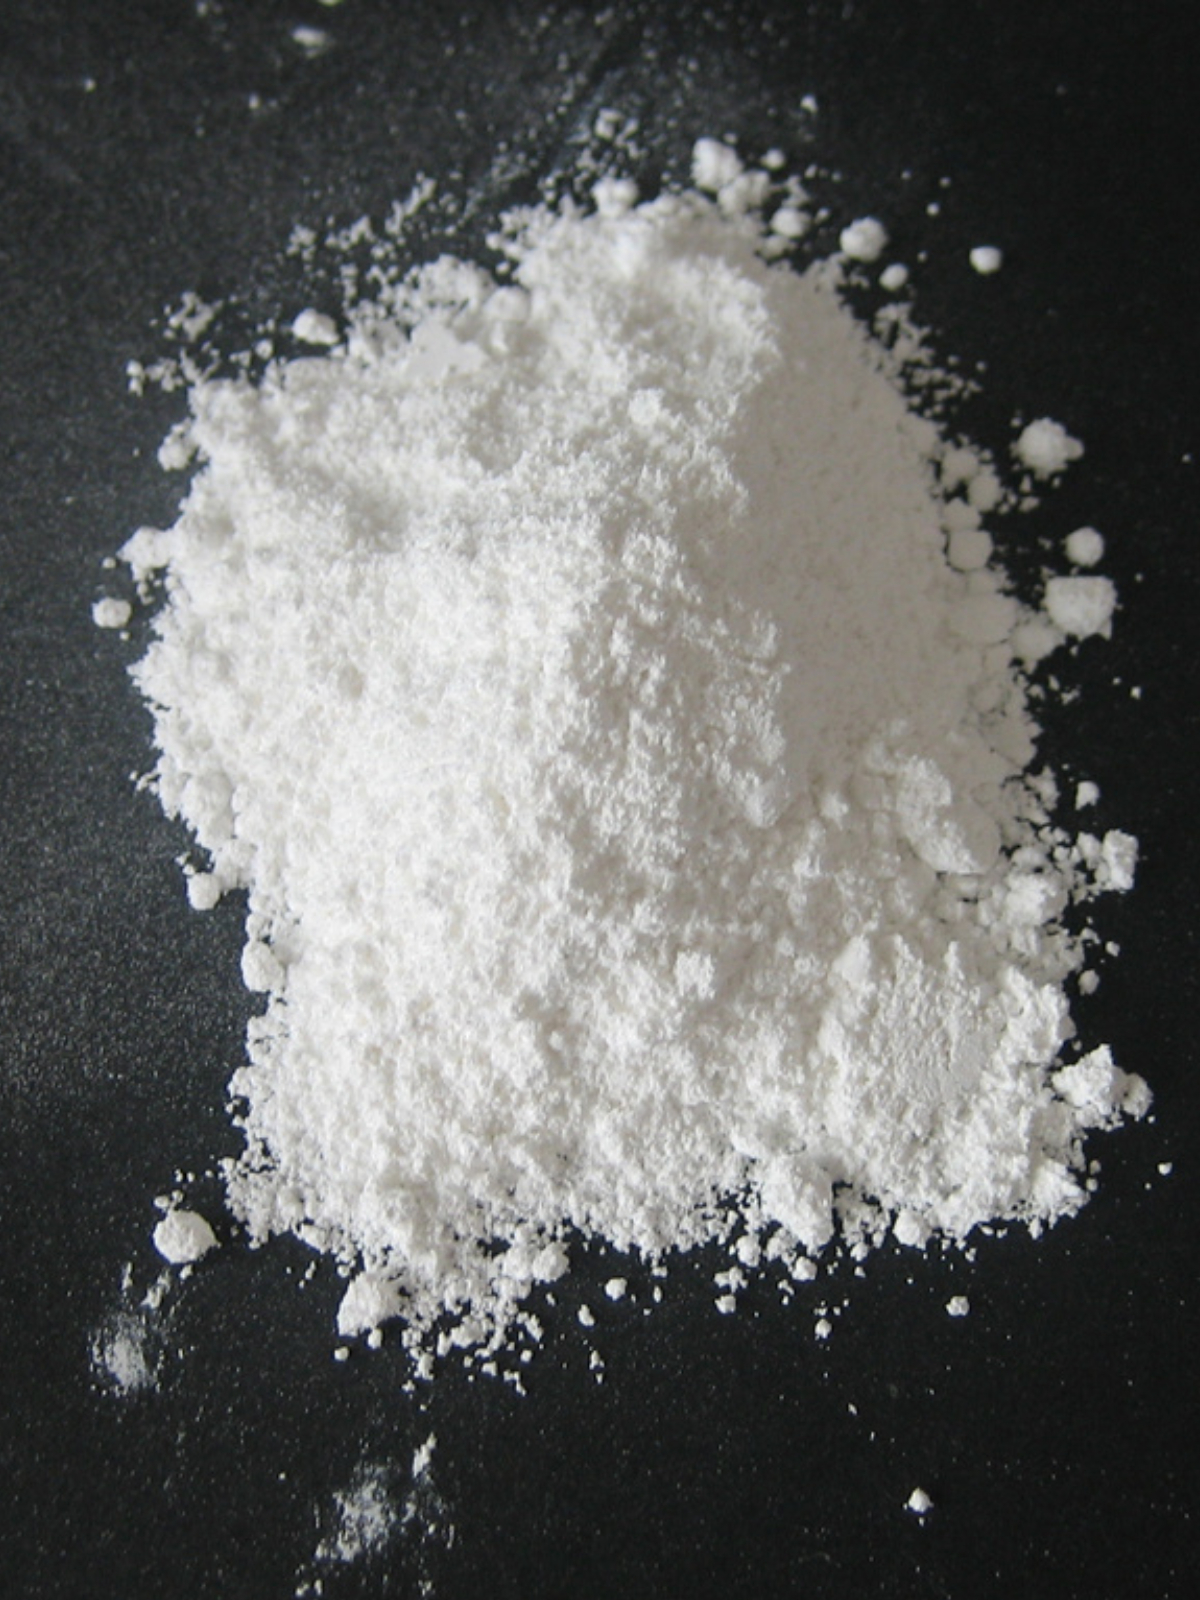 Zinc Oxide 2